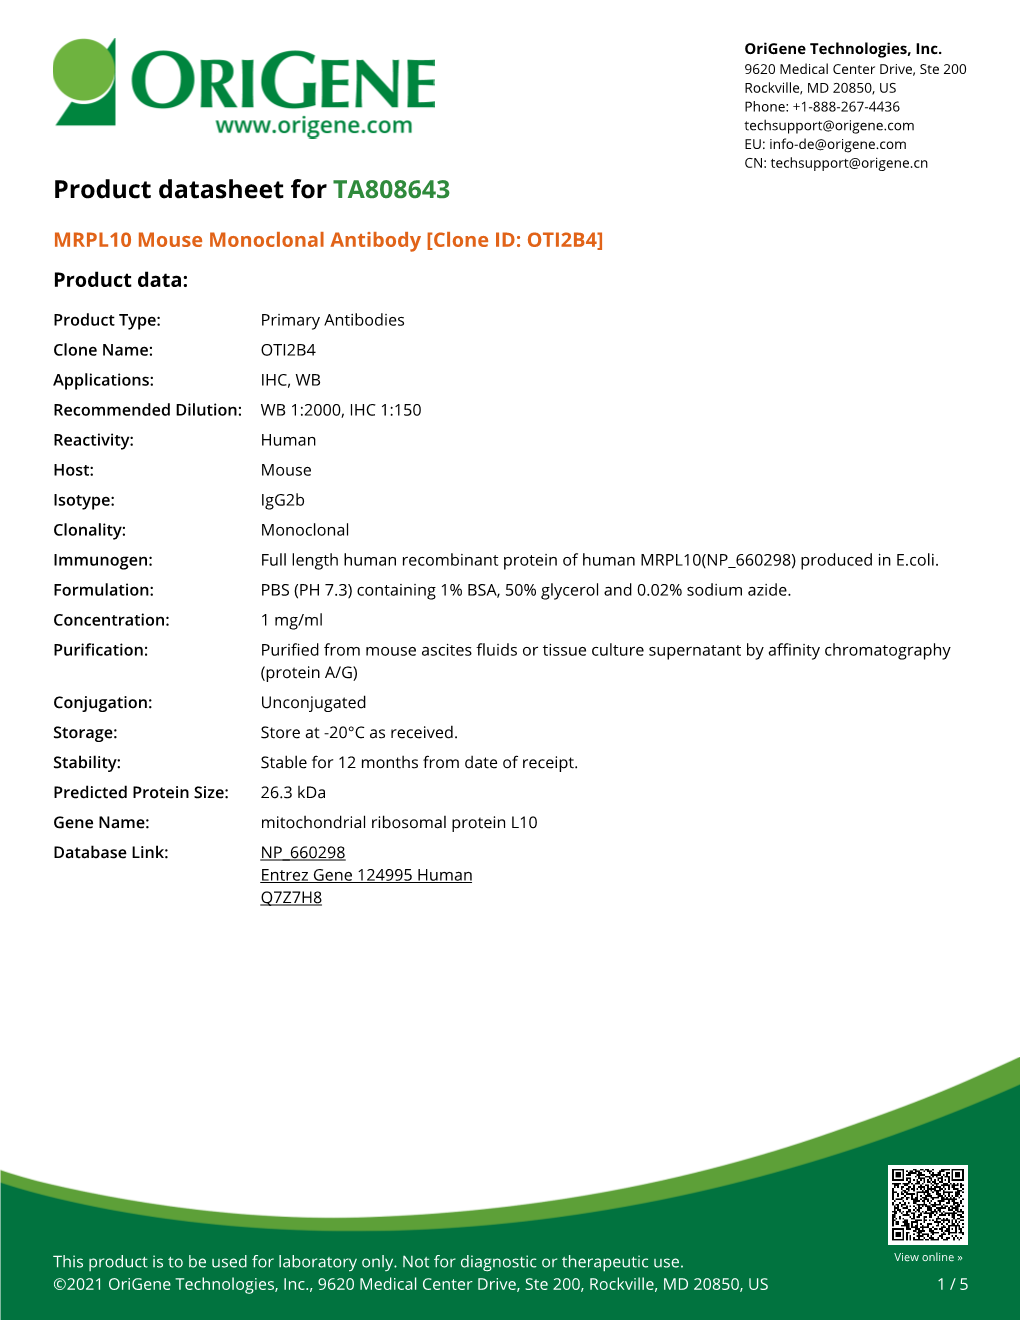 MRPL10 Mouse Monoclonal Antibody [Clone ID: OTI2B4] Product Data